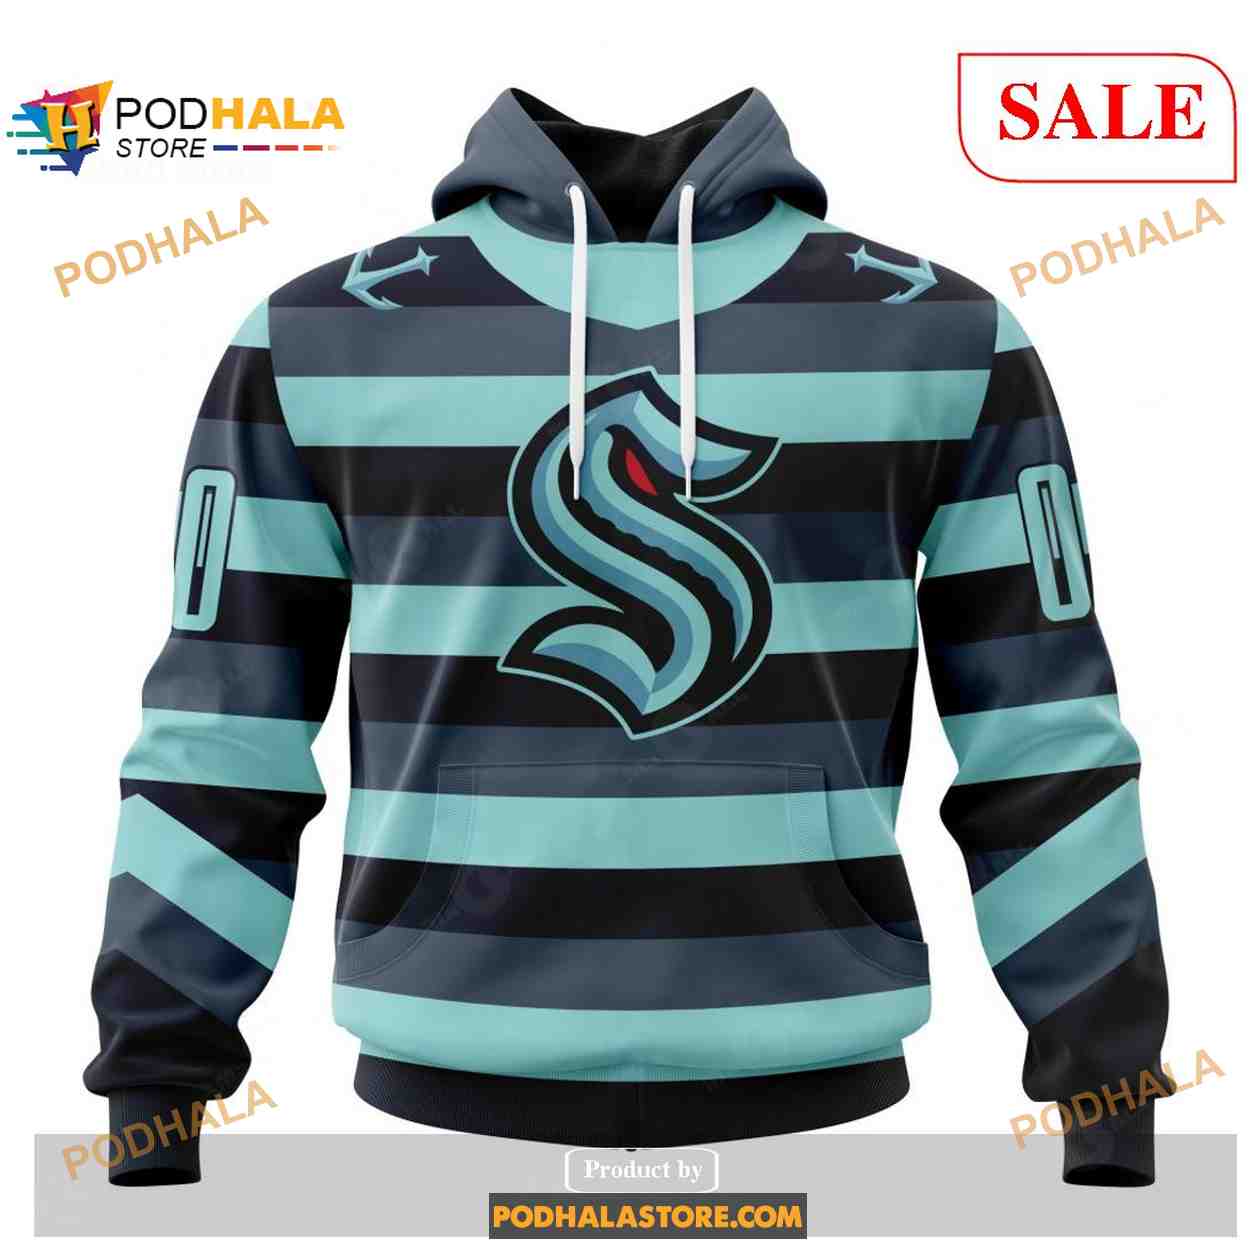 Seattle Kraken New NHL Team T Shirt, hoodie, sweater, long sleeve